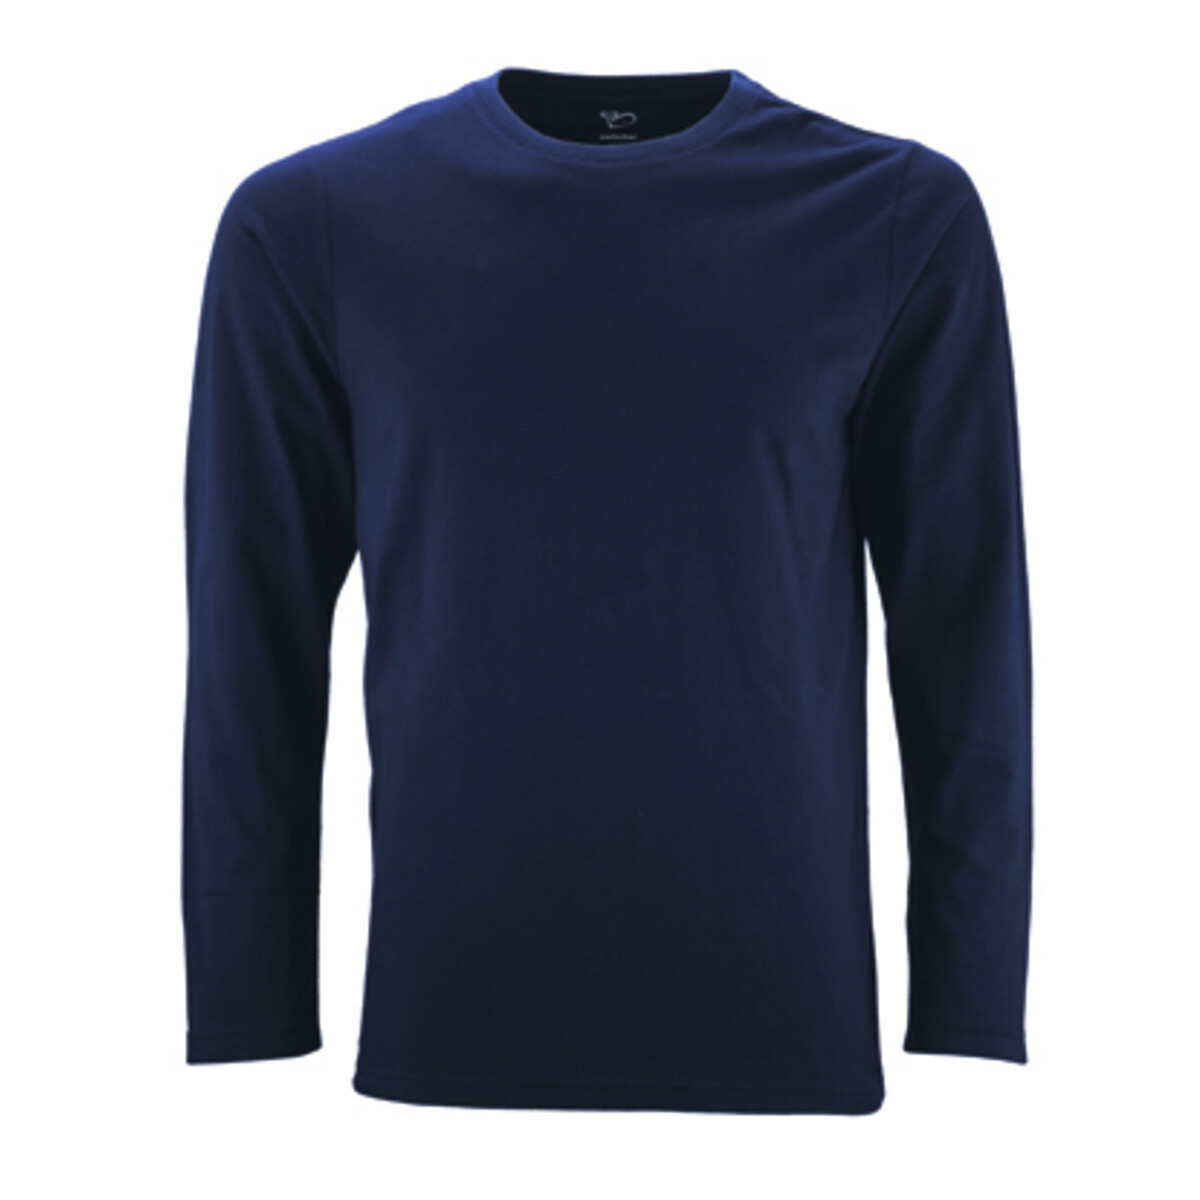 Herren Loic Recycled Baumwolle-Polyester Langarm-T-Shirt